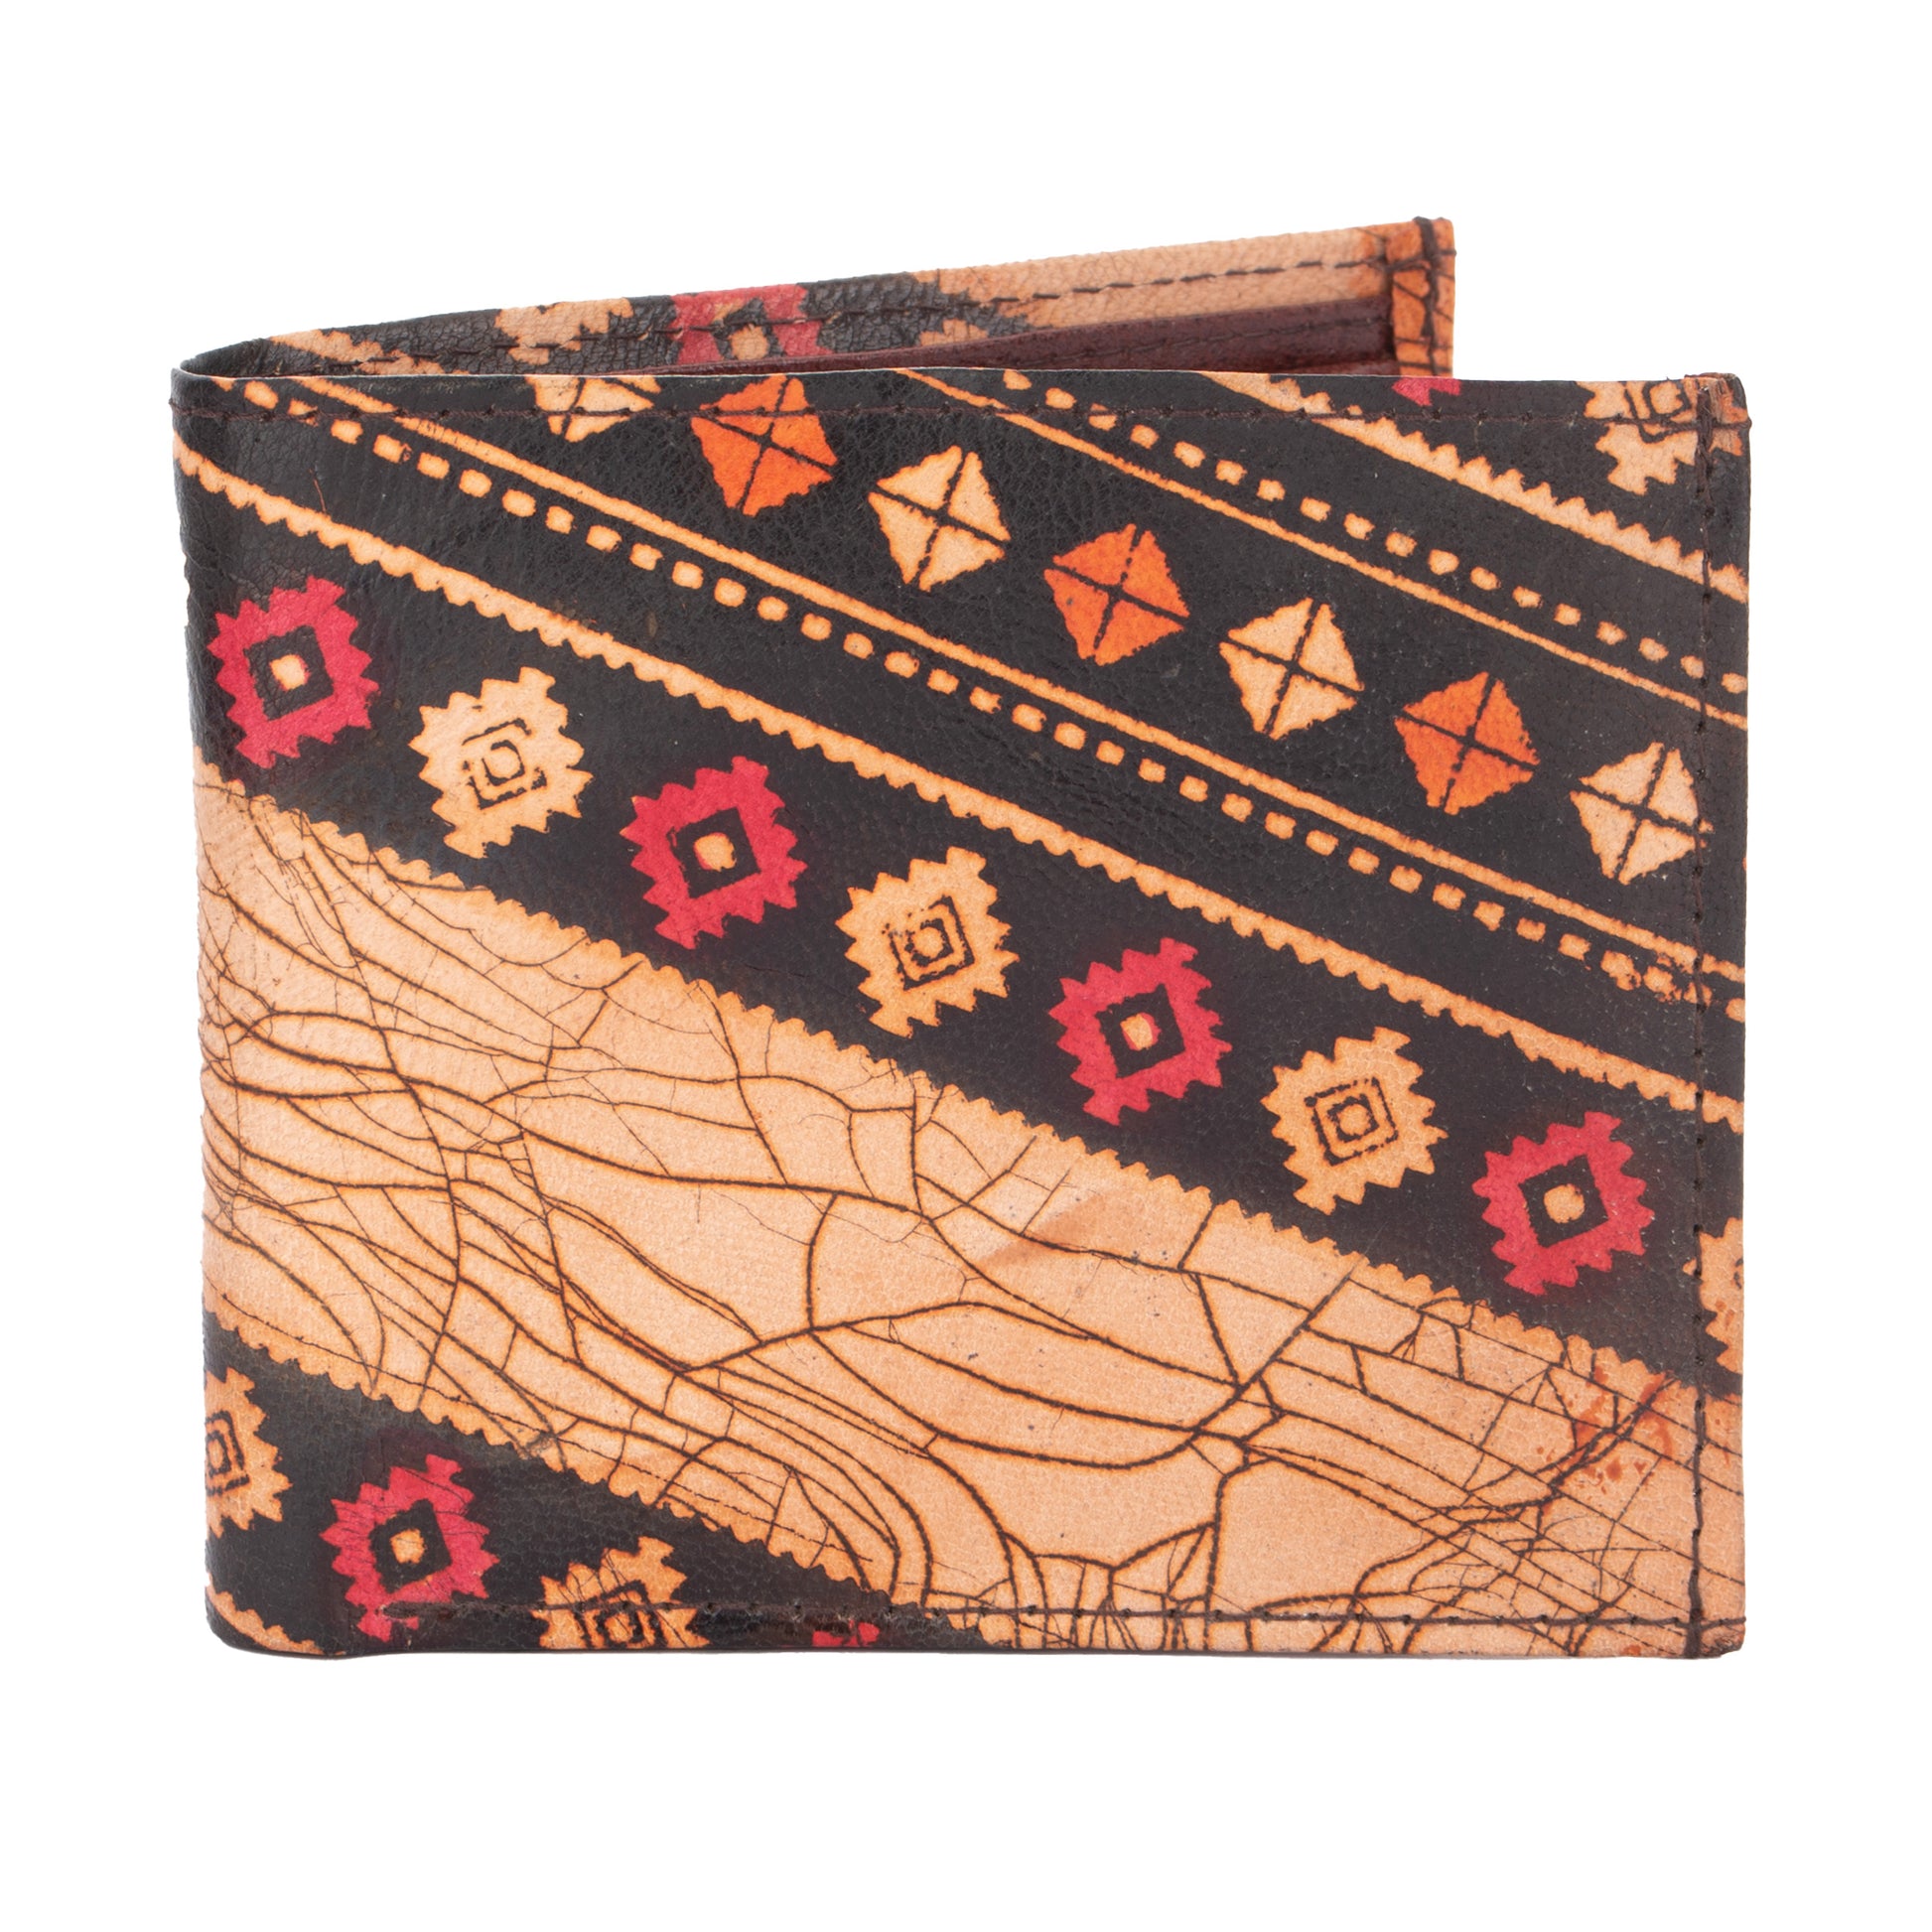 shantiniketan-pure-leather-printed-men-s-wallet-w05